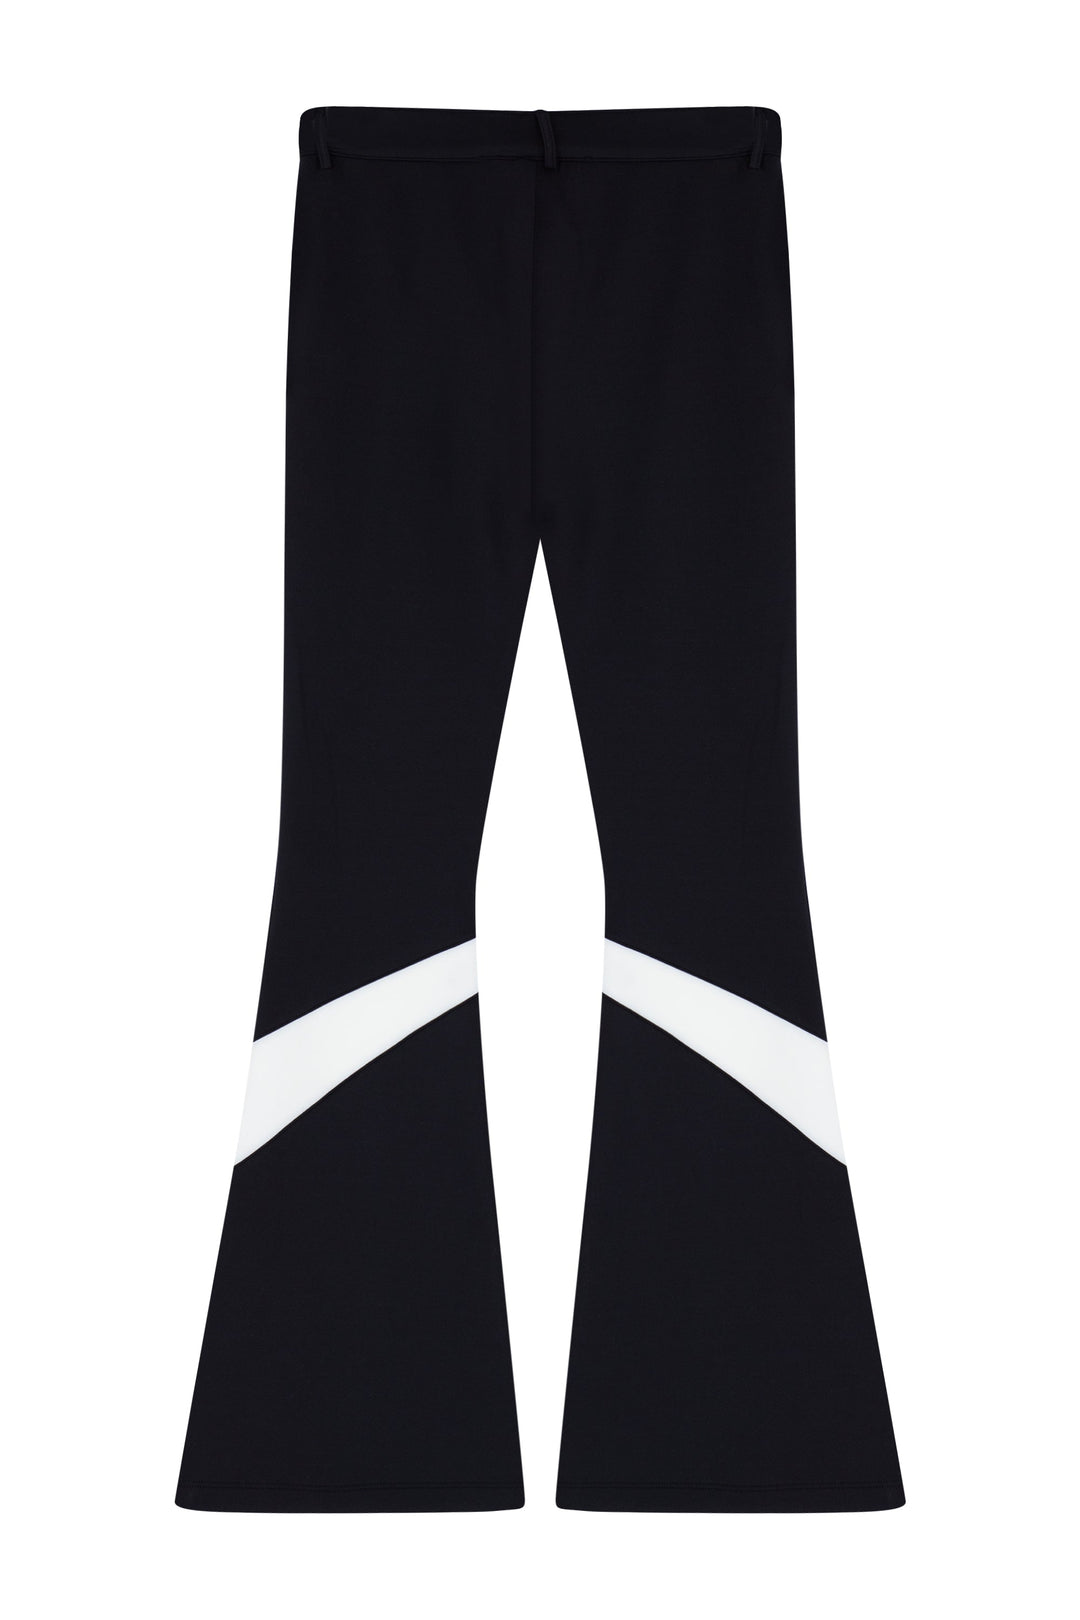 Black Contrast Ski Pants